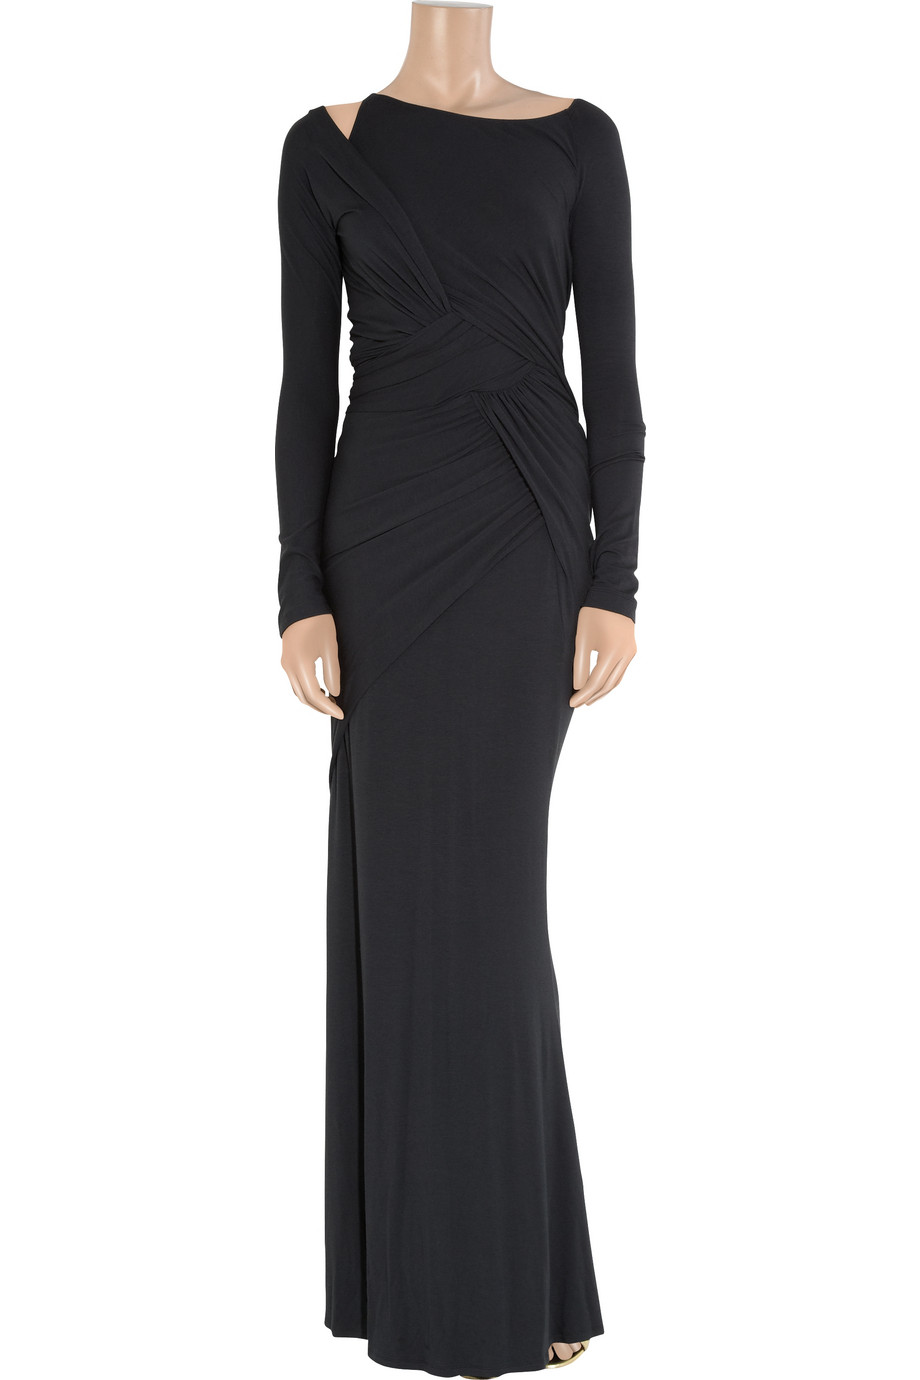 Lyst - Donna karan Wrap-effect Stretch-jersey Maxi Dress in Black